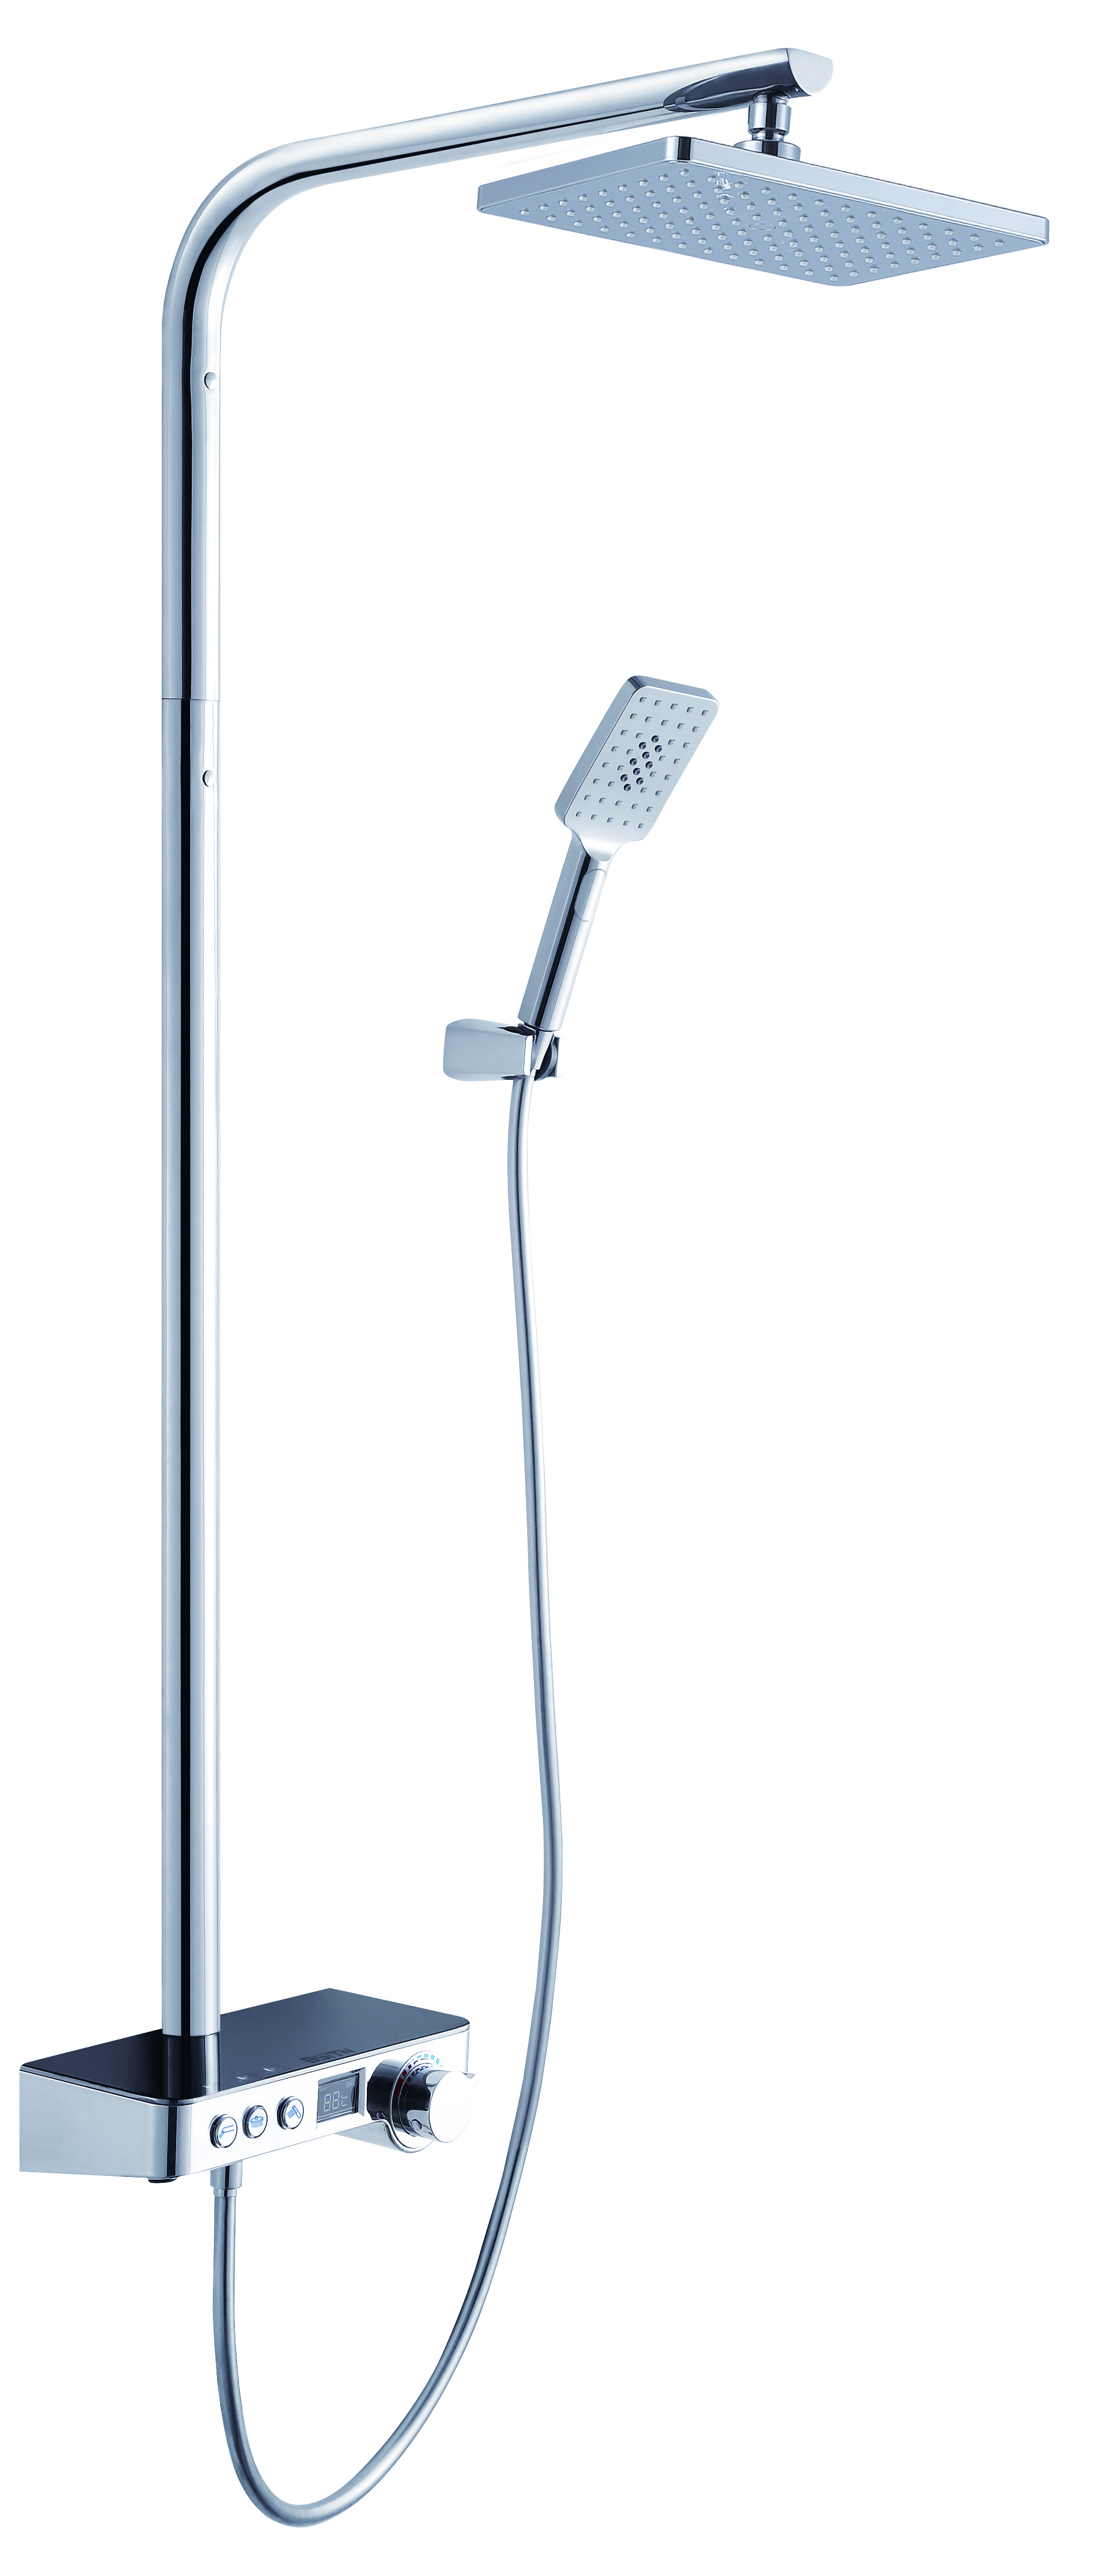 Smart Shower Faucet Shower